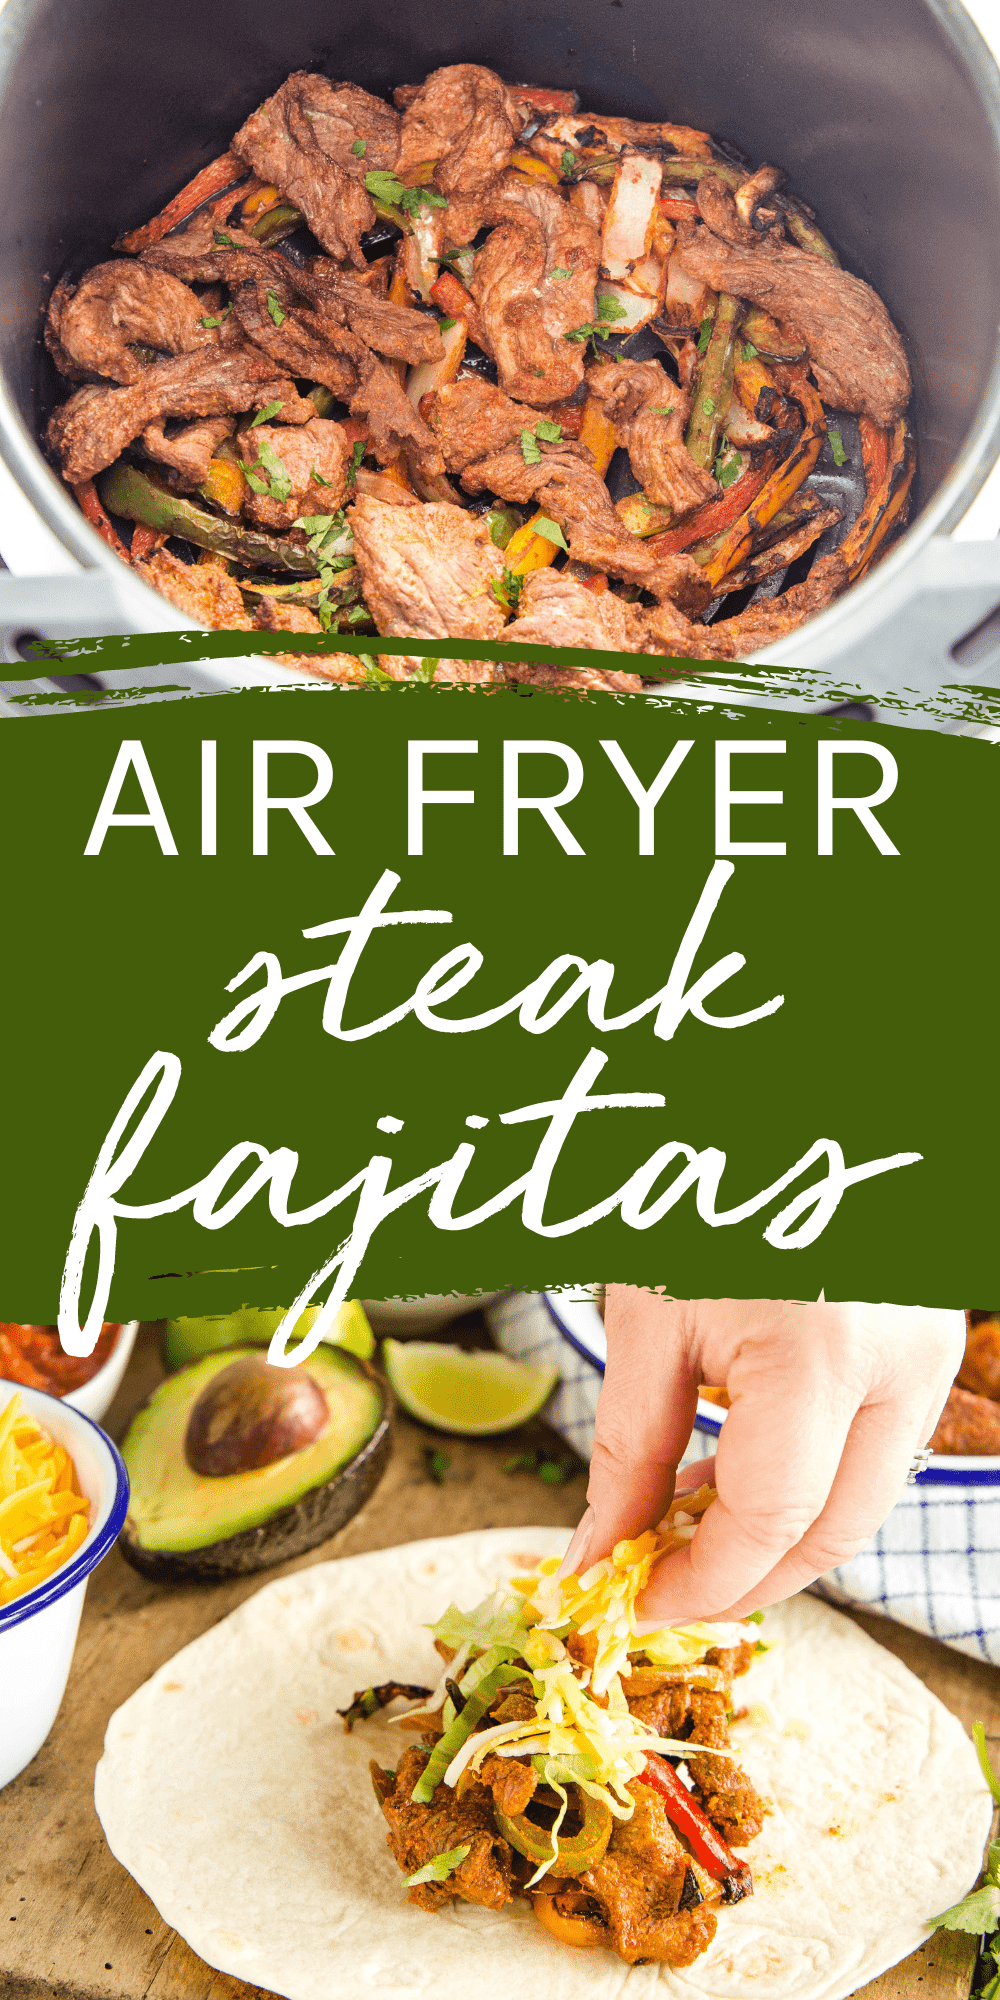 This Air Fryer Steak Fajitas recipe is the best easy weeknight meal - Mexican-style! Juicy steak, fajita spices, grilled peppers - ready in 15 minutes! Recipe from thebusybaker.ca! #airfryersteakfajitas #steakfajitas #fajitasrecipe #steakfajitarecipe #airfryerrecipe #dinner #easymeal via @busybakerblog